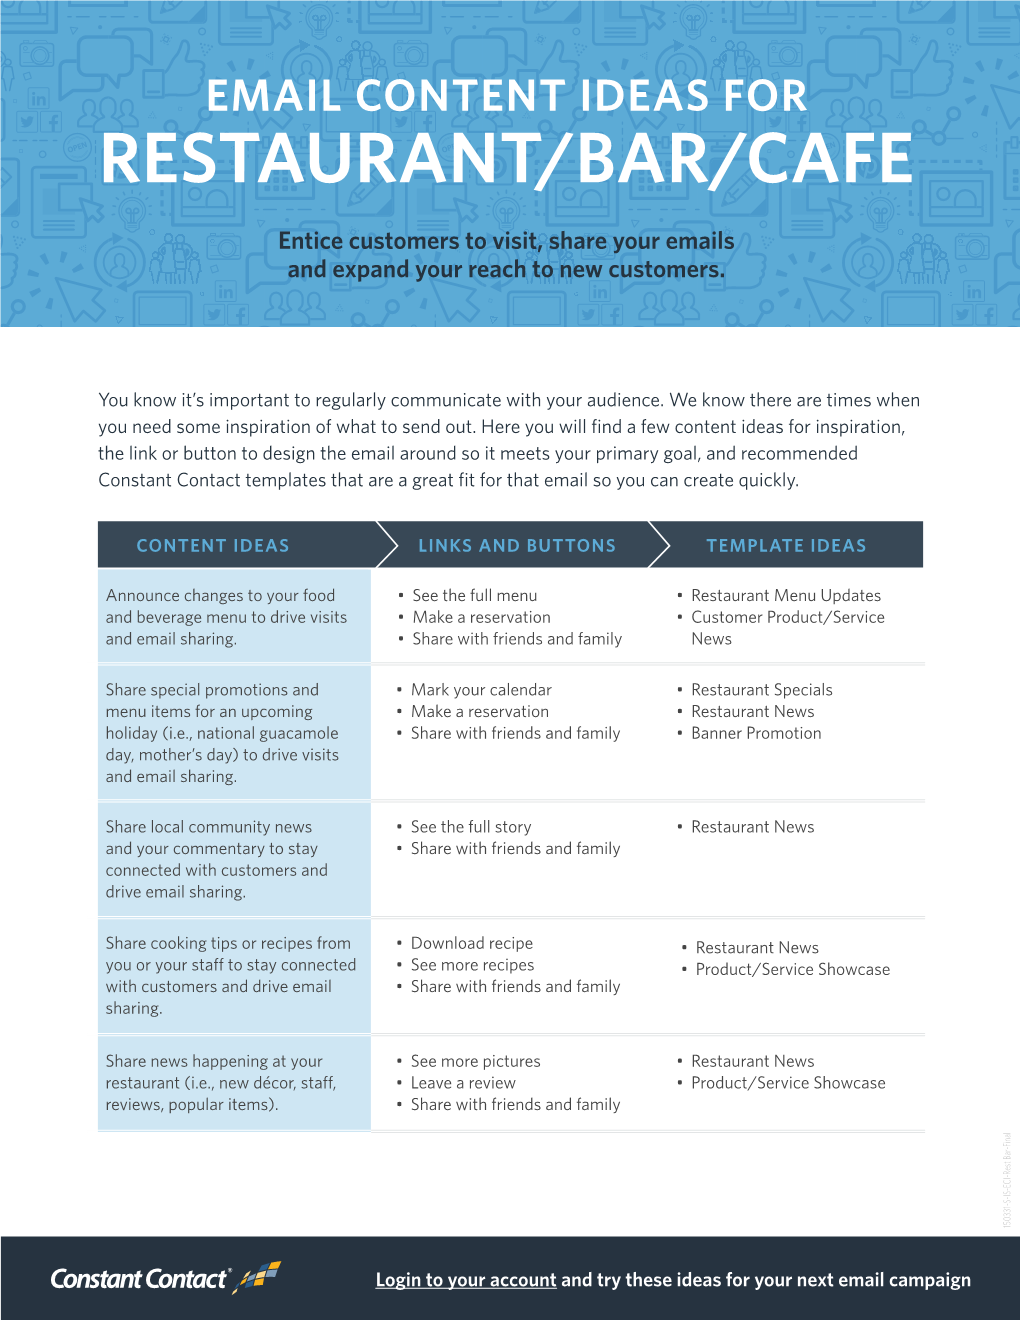 Restaurant/Bar/Cafe